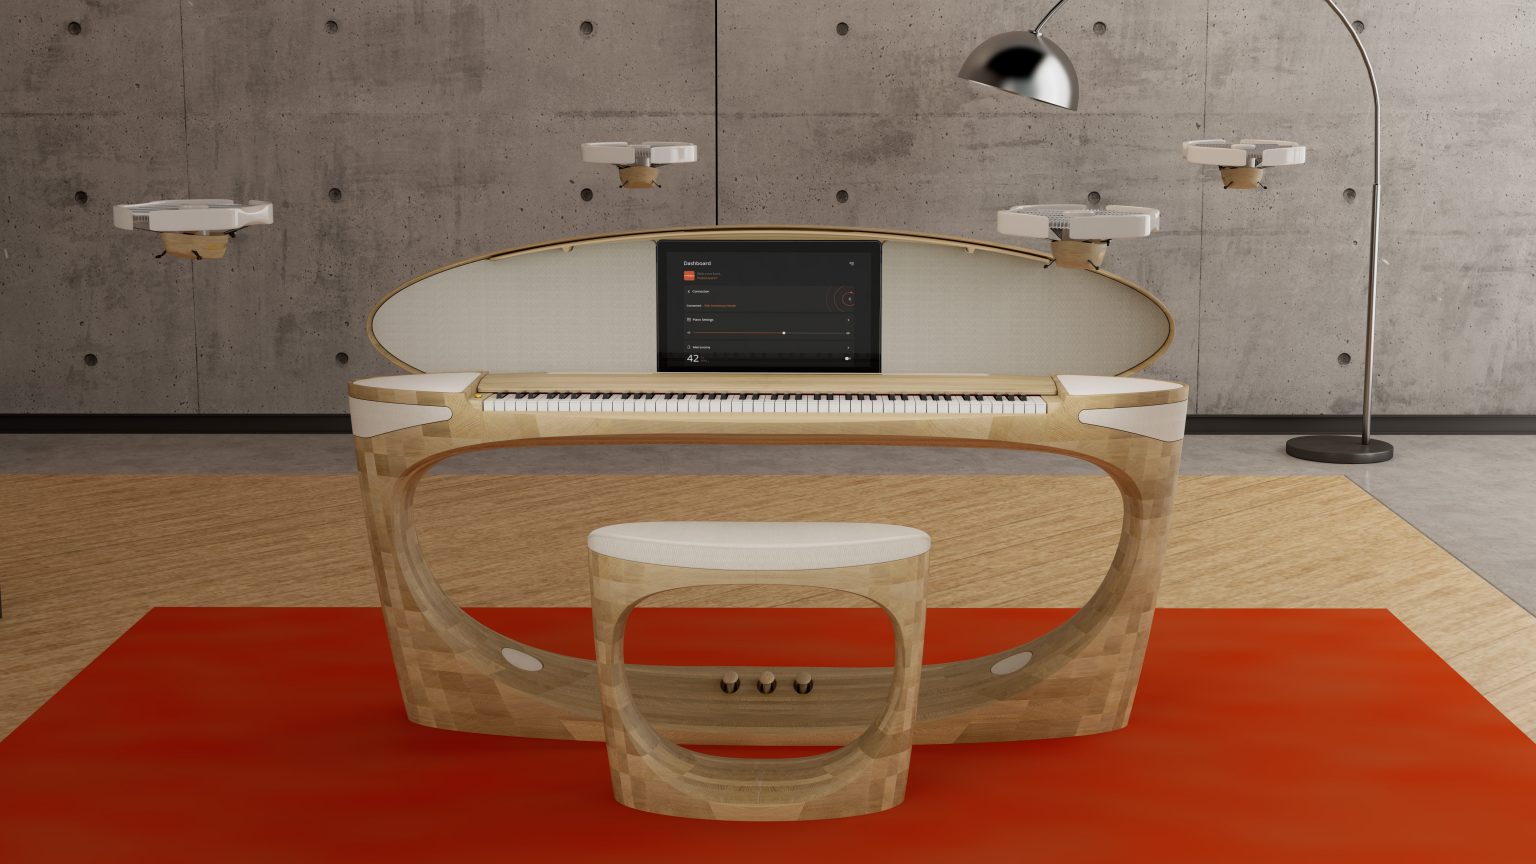 Roland Showcases 50th Anniversary Concept Piano At CES 2023